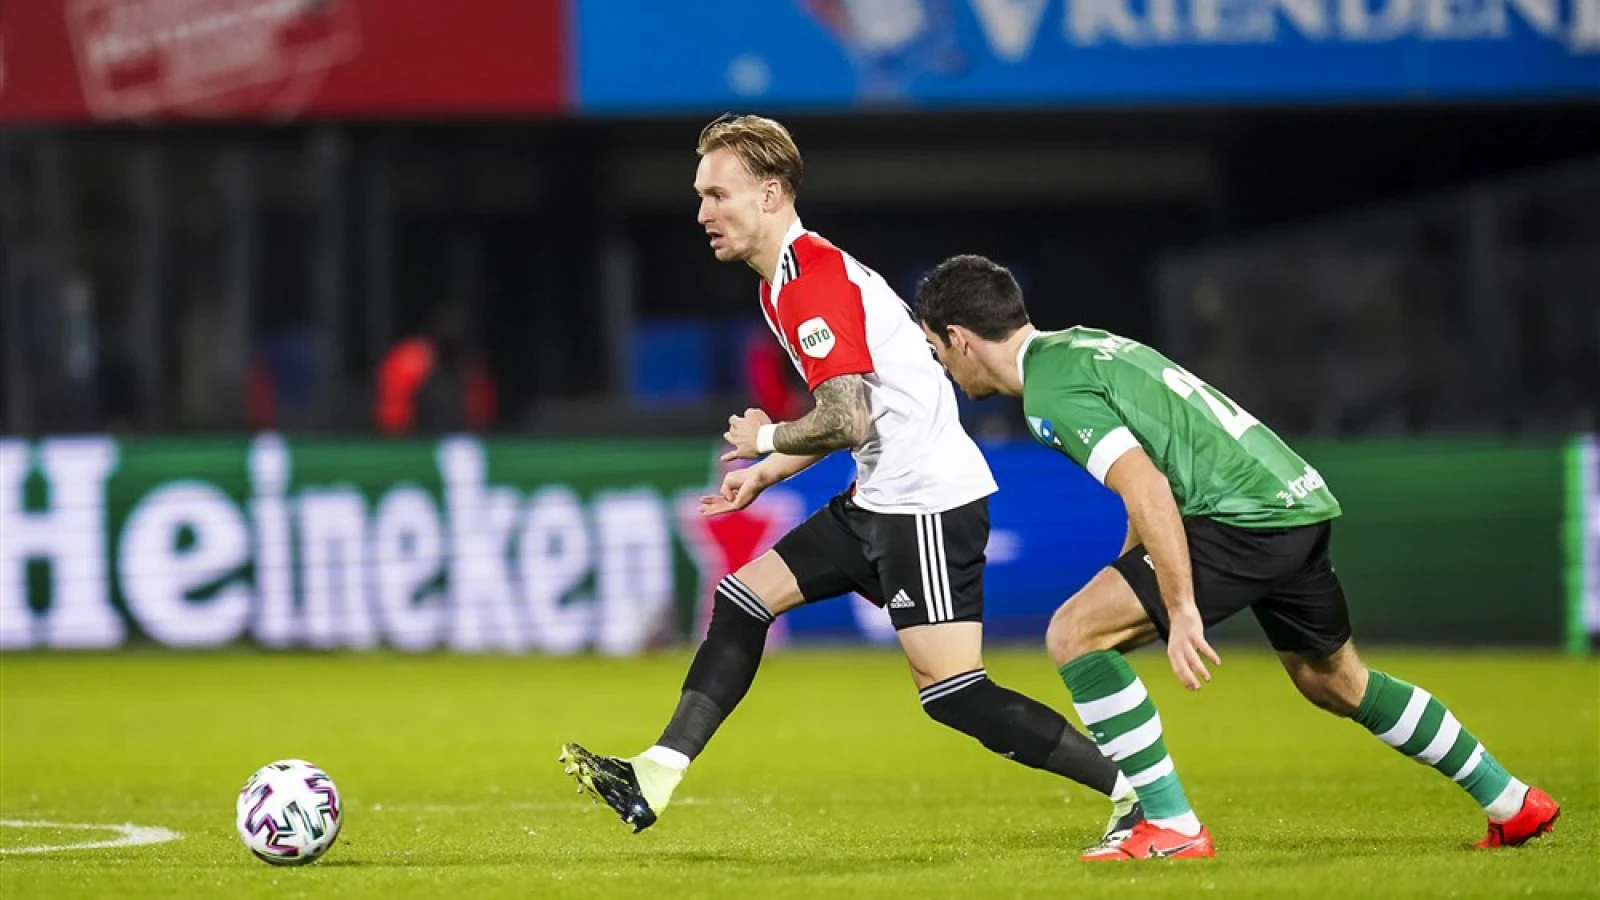 LIVE | Feyenoord - PEC Zwolle 1-0 | Einde wedstrijd